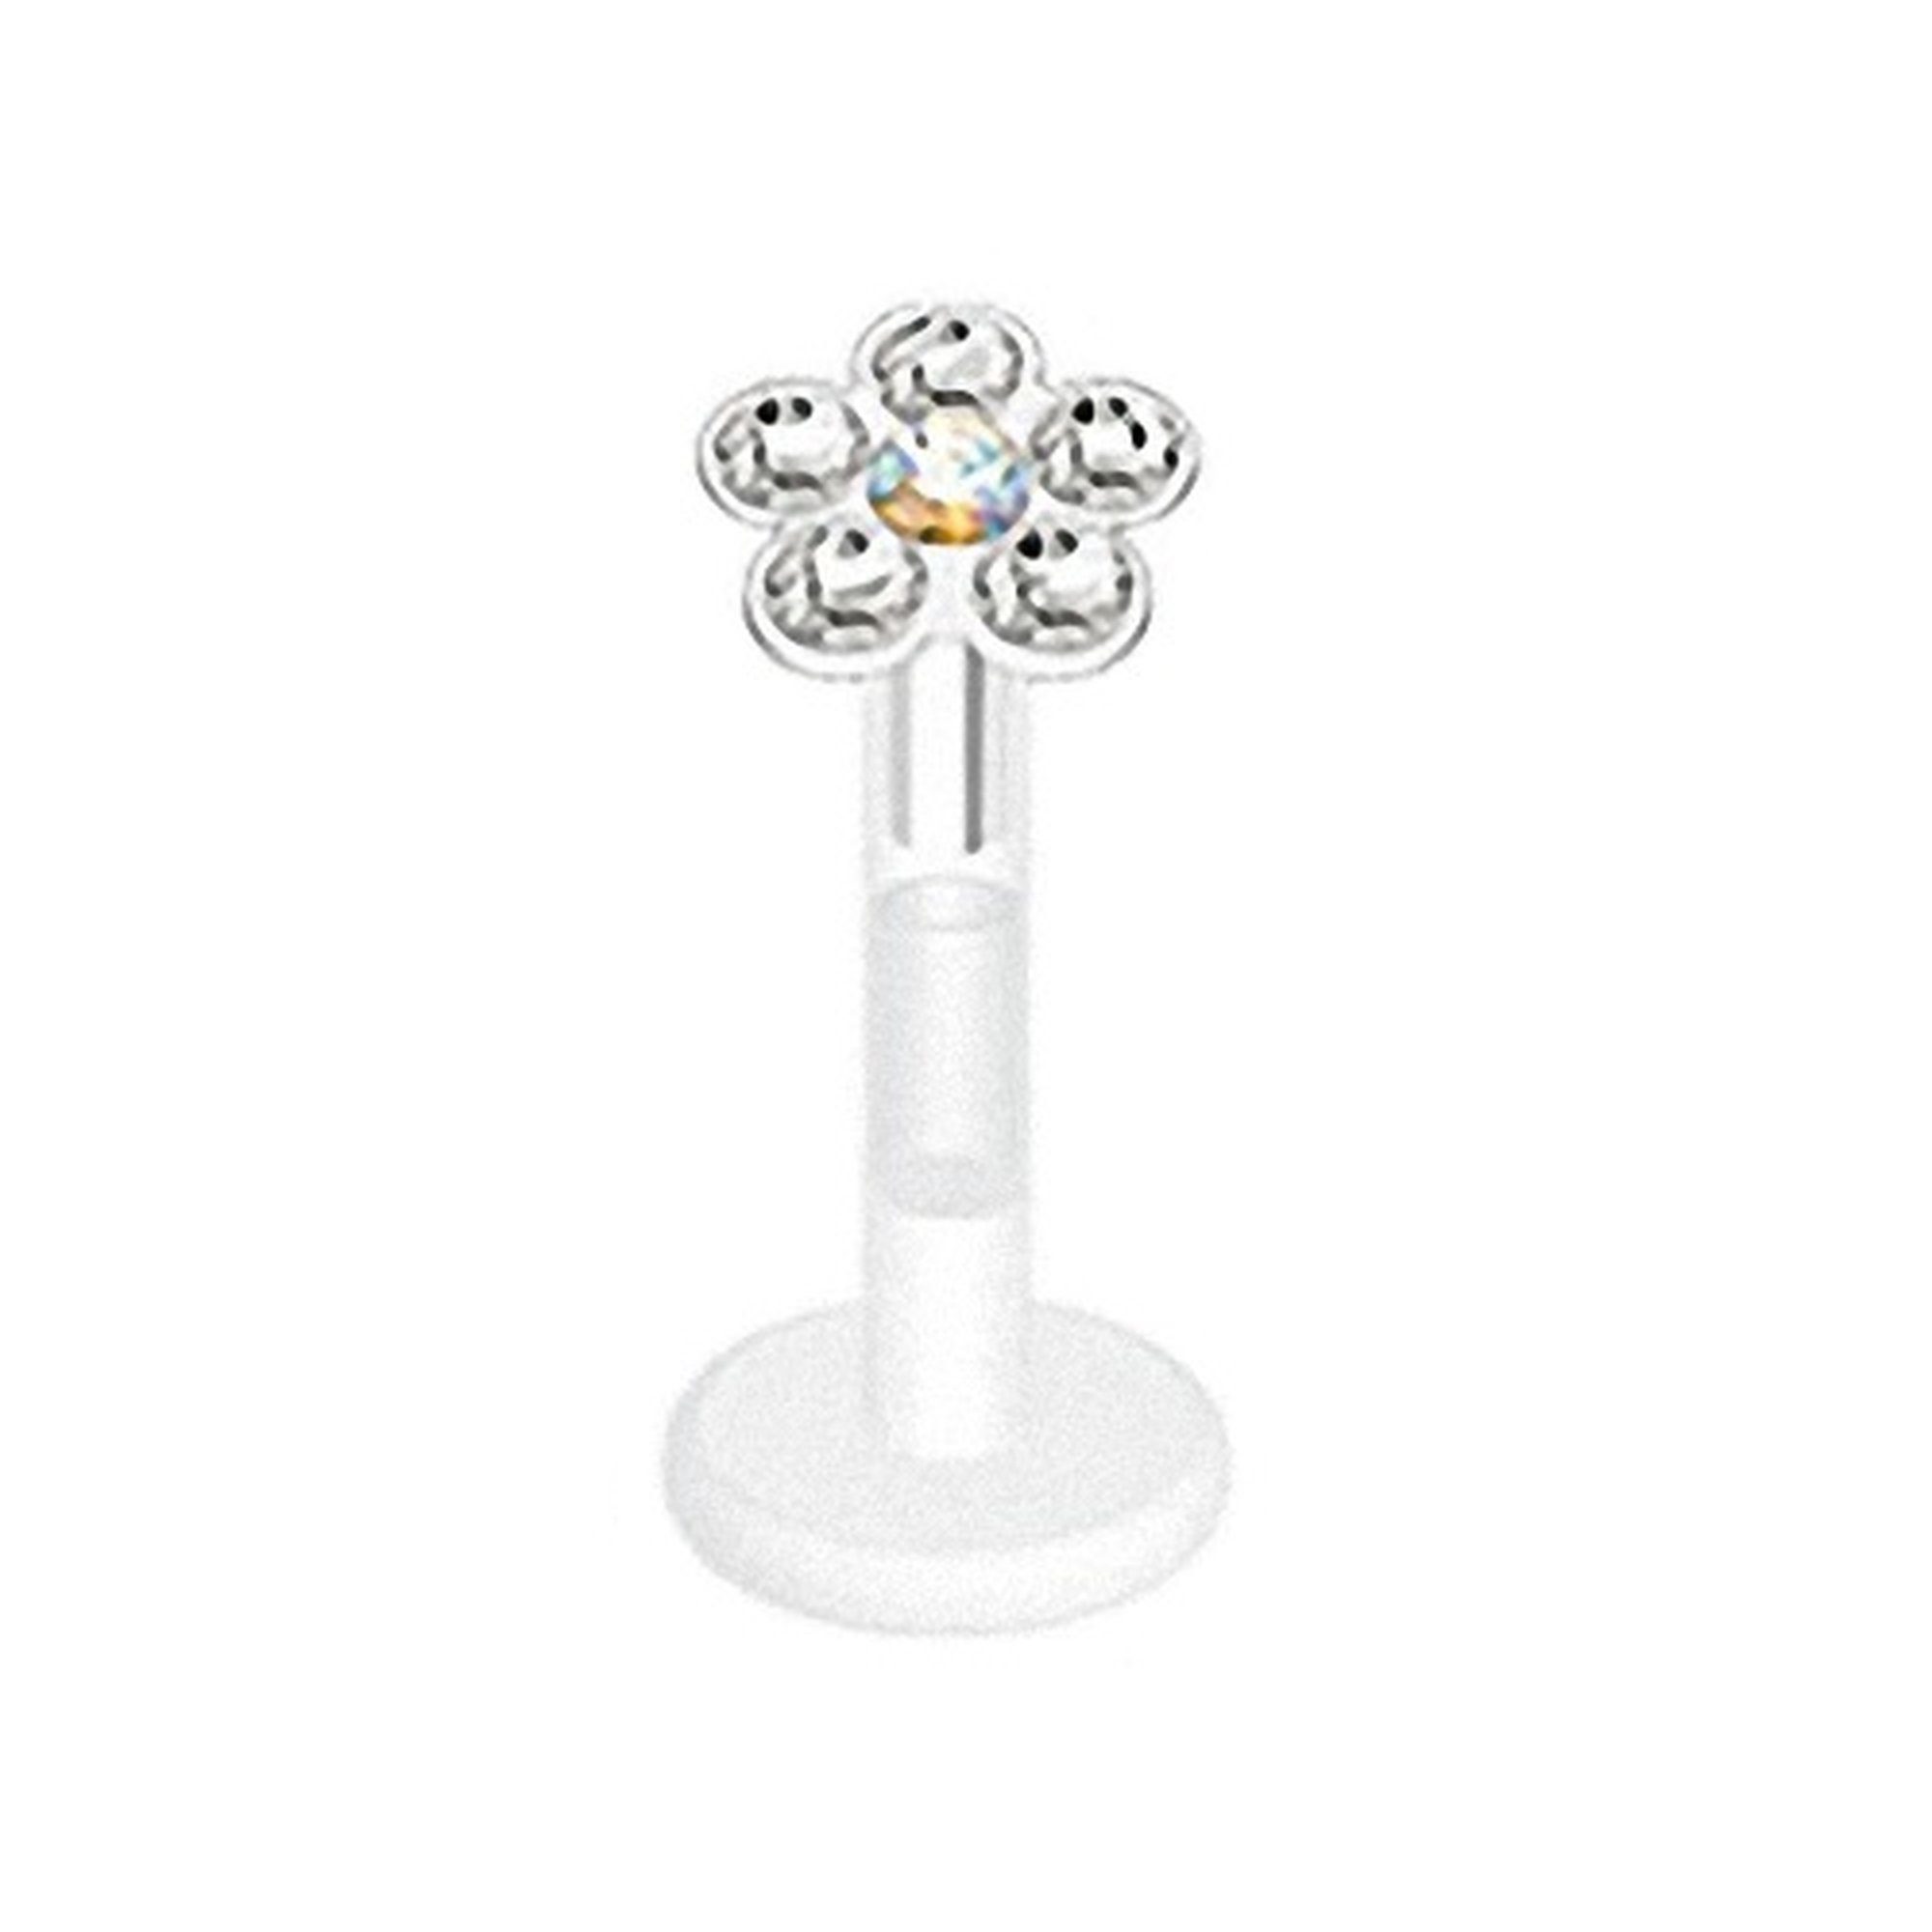 Taffstyle Piercing-Set Piercing Bioflex Monroe Multi Kristall Blume 8mm, Lippenpiercing Lippe Schmuck Bioflex Monroe Multi Kristall Blume 8mm Clear - Rainbow